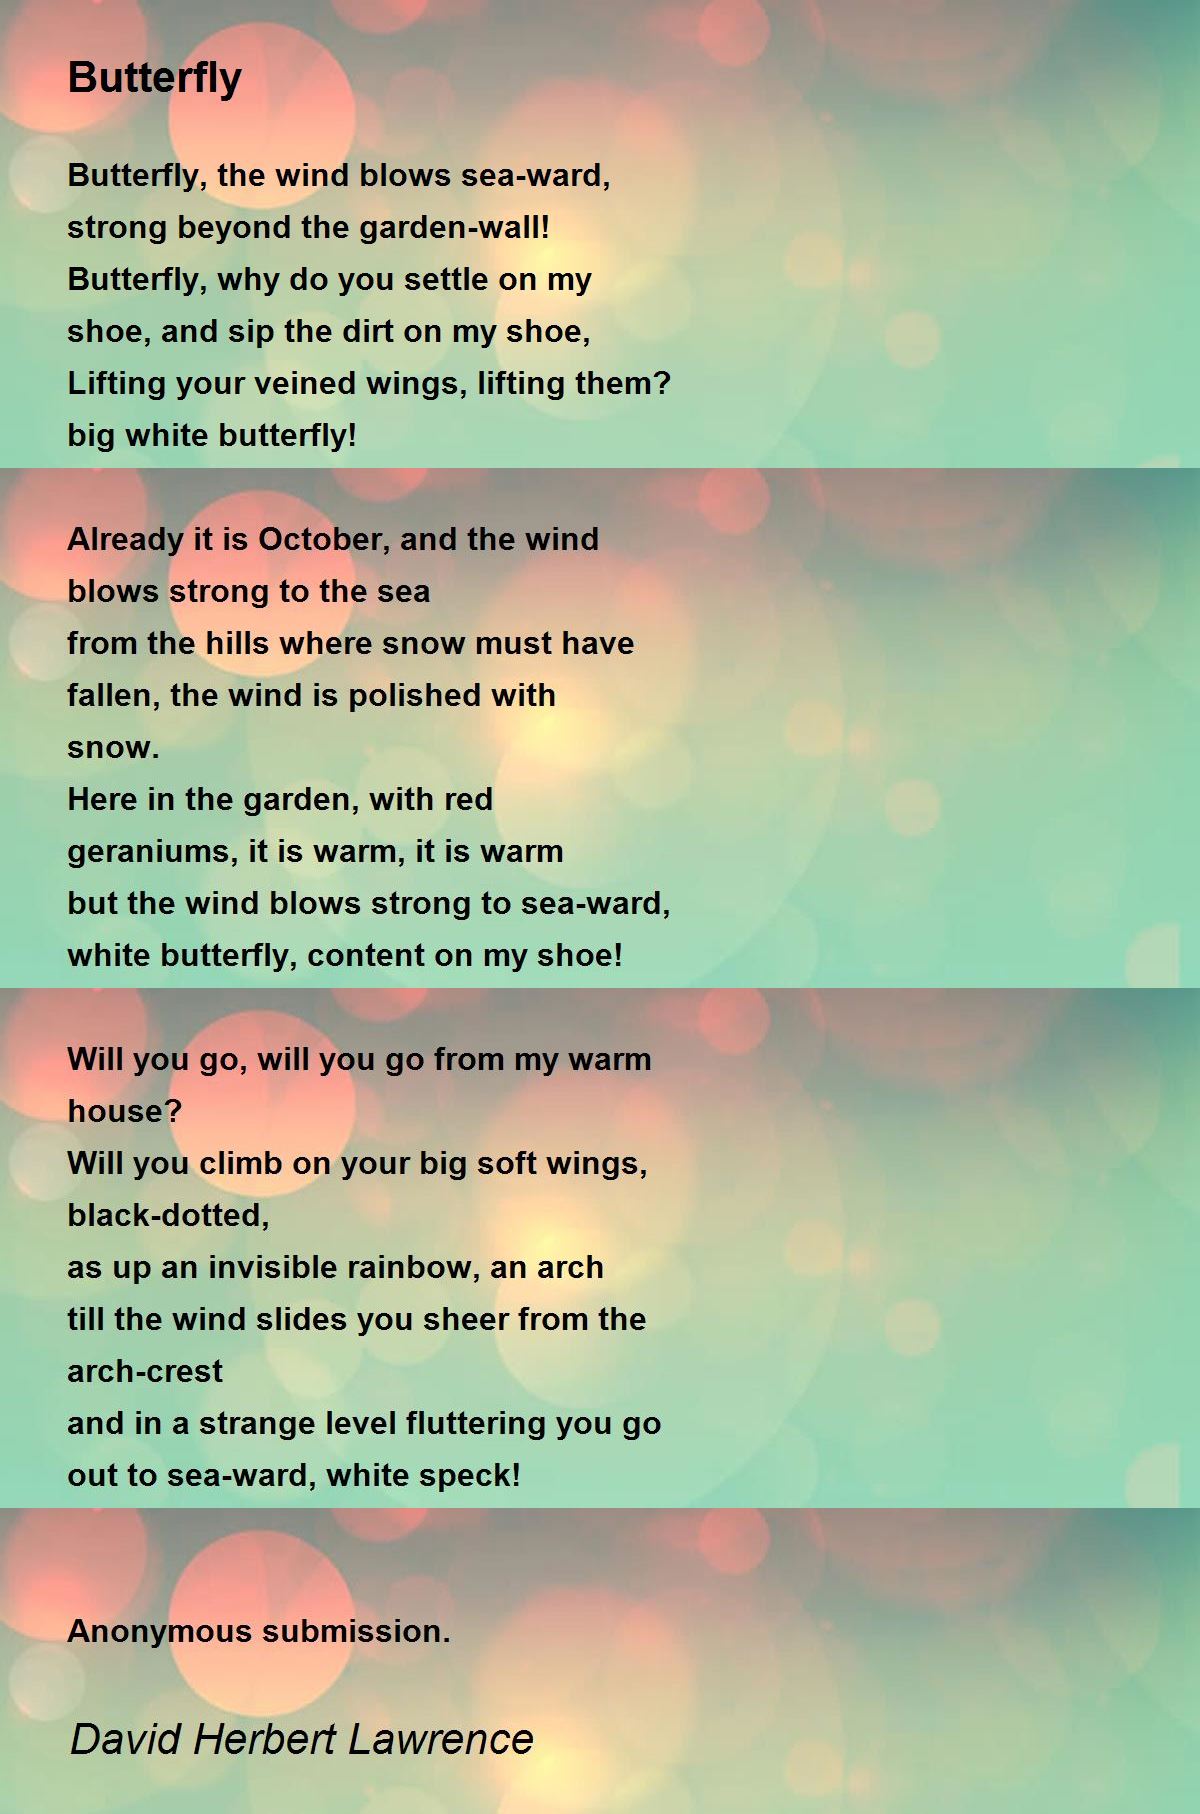 Butterfly Poem by David Herbert Lawrence - Poem Hunter